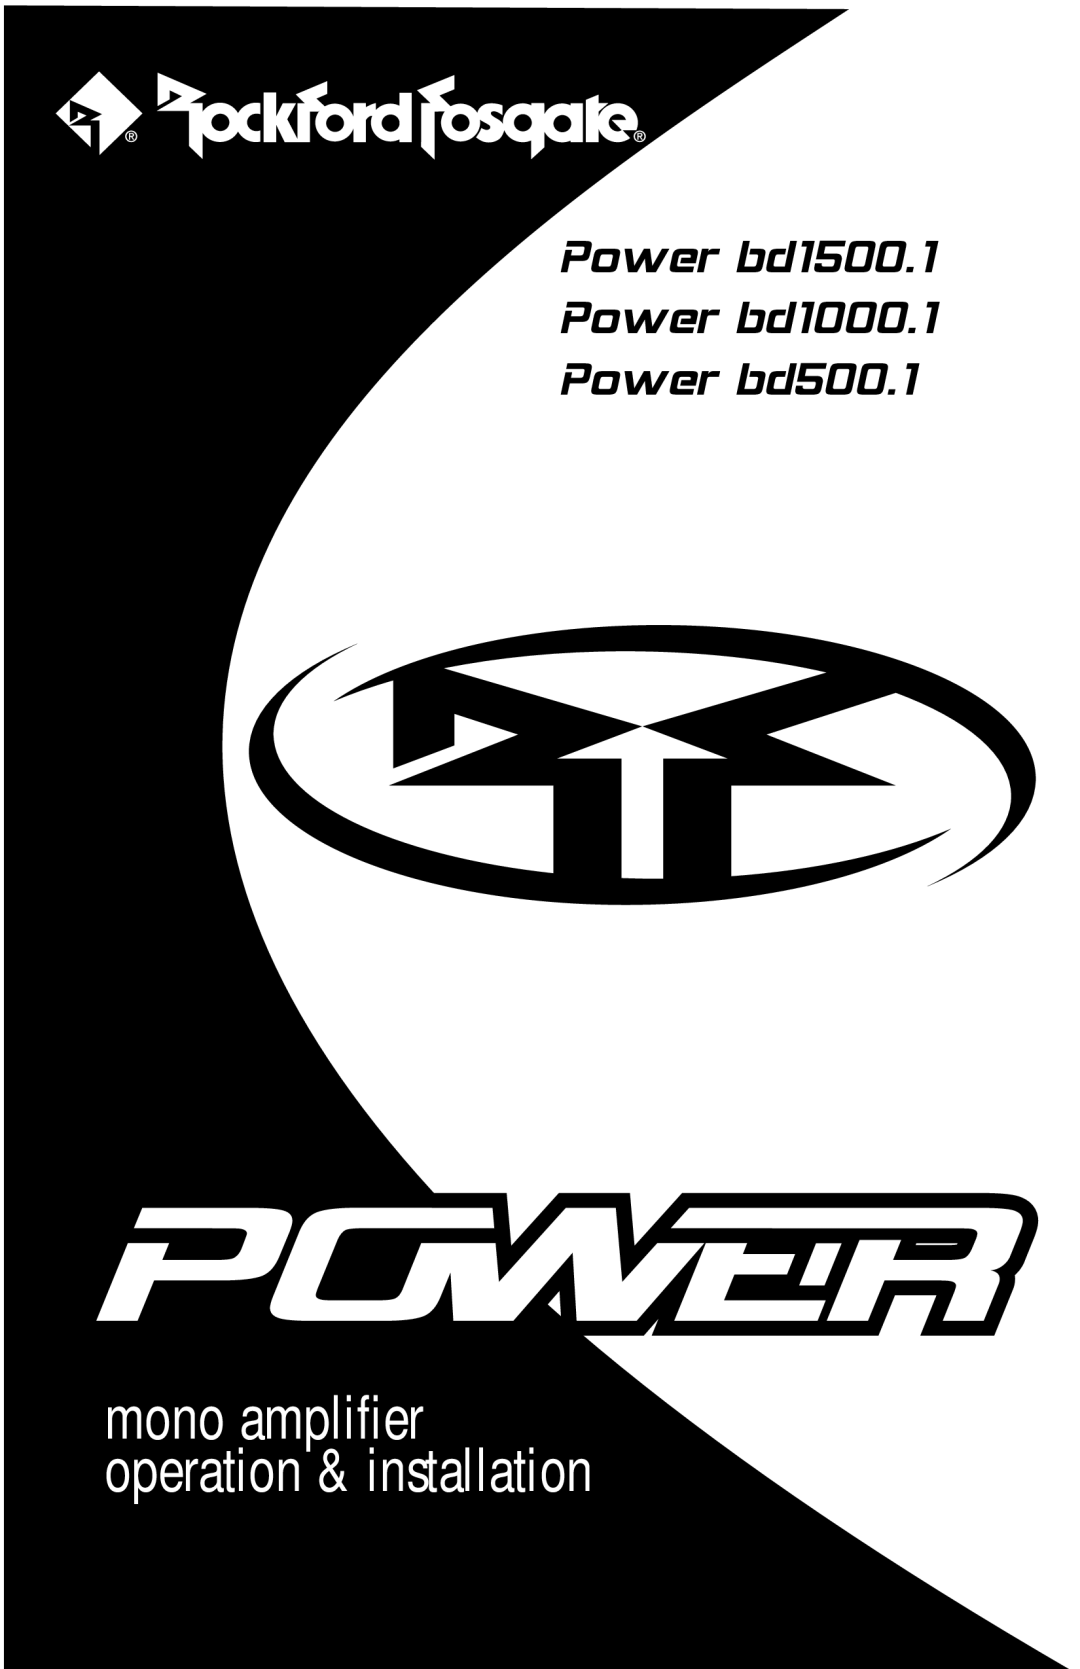 Rockford Fosgate manual Power bd1500.1 Power bd1000.1 Power bd500.1, mono amplifier operation & installation 